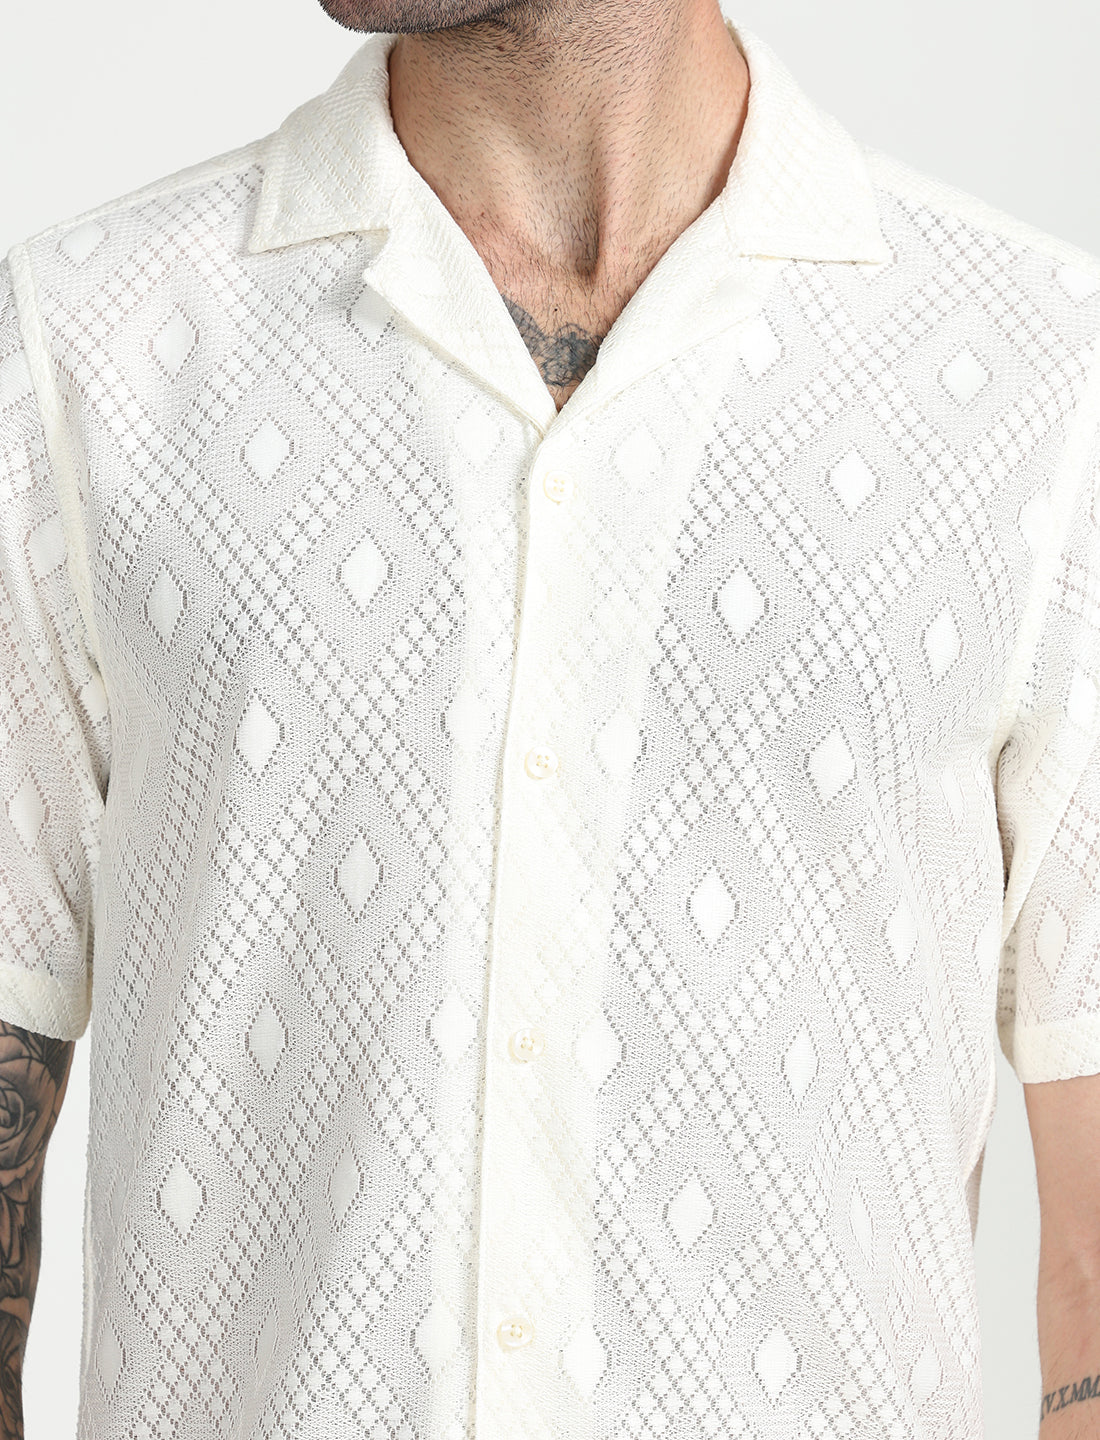 Ivory Crochet Half Sleeve Shirt